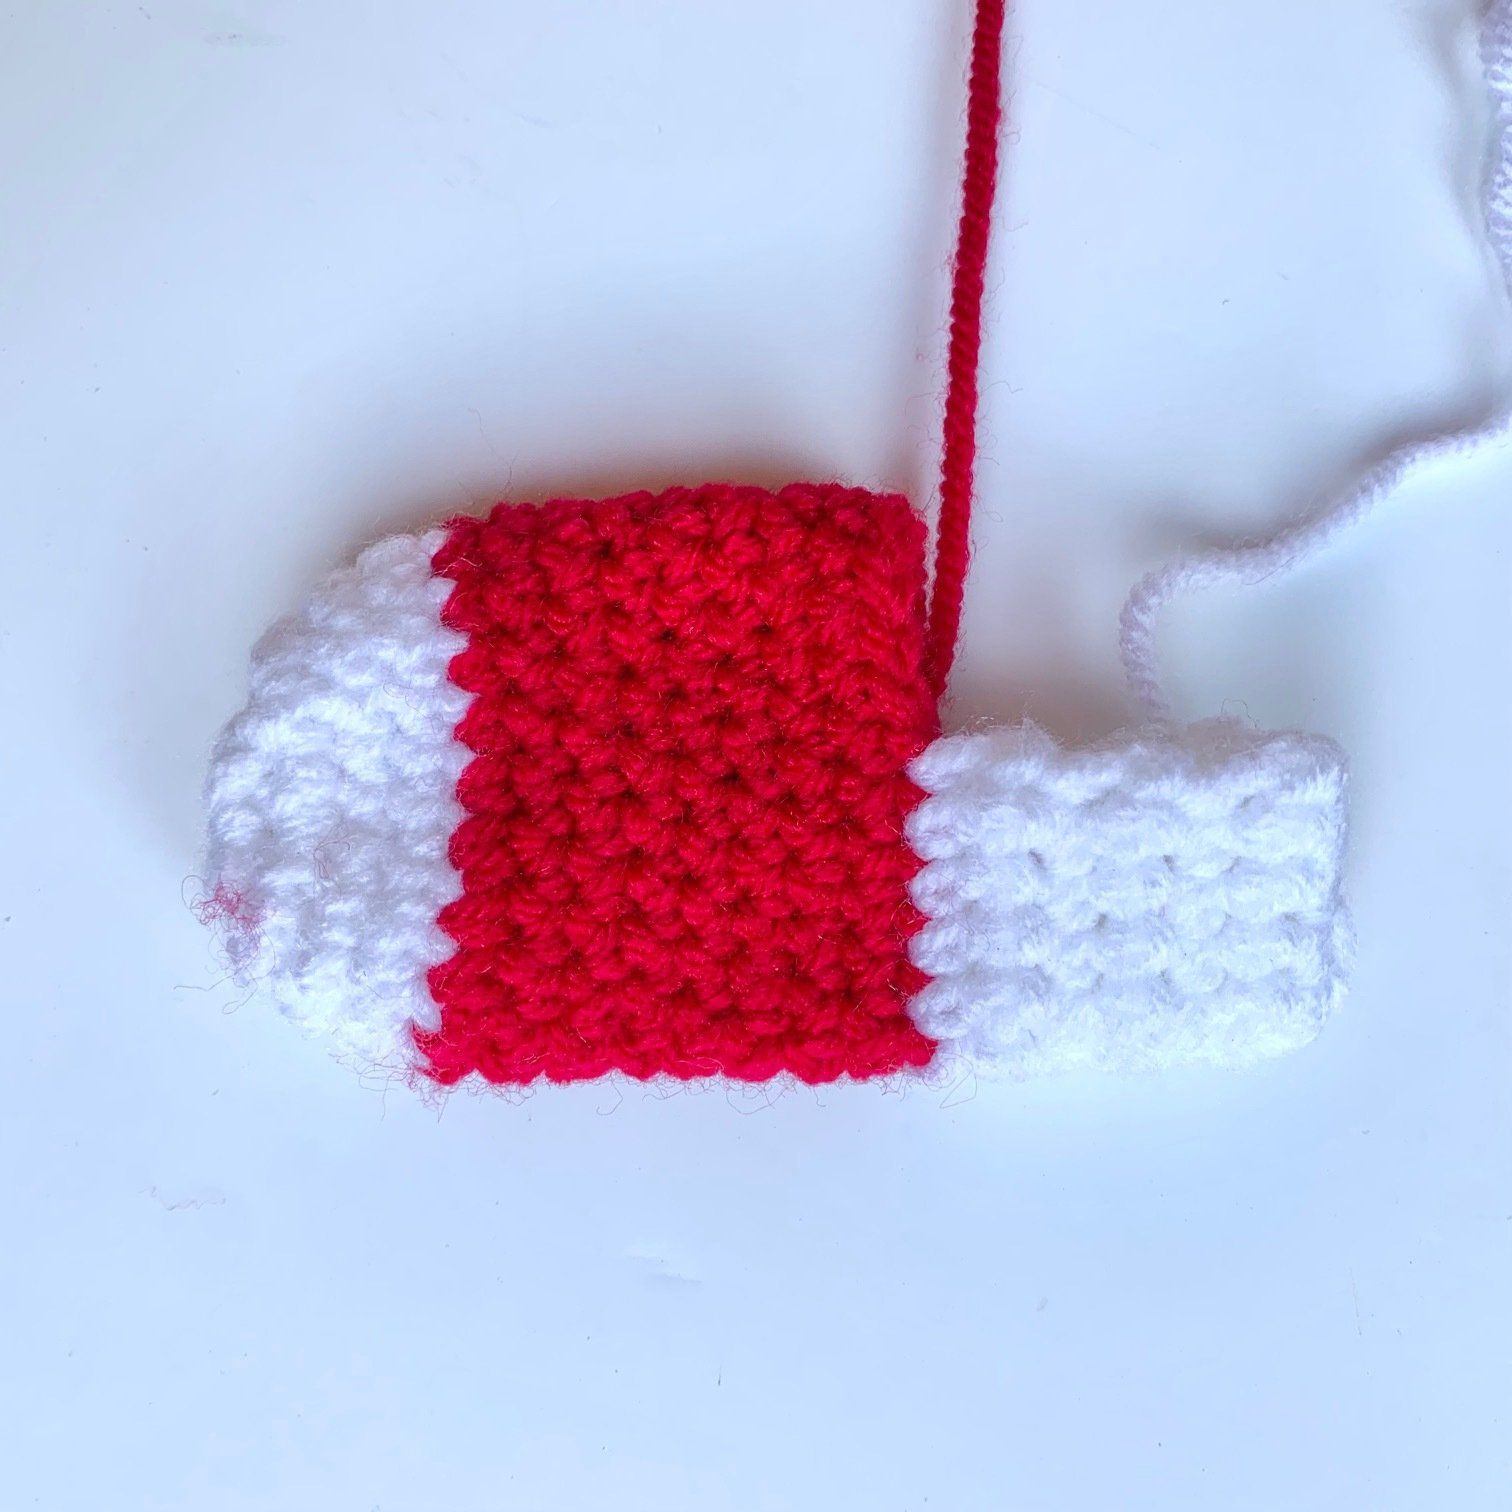 Easy Crochet Stocking Pattern Using Single Crochet